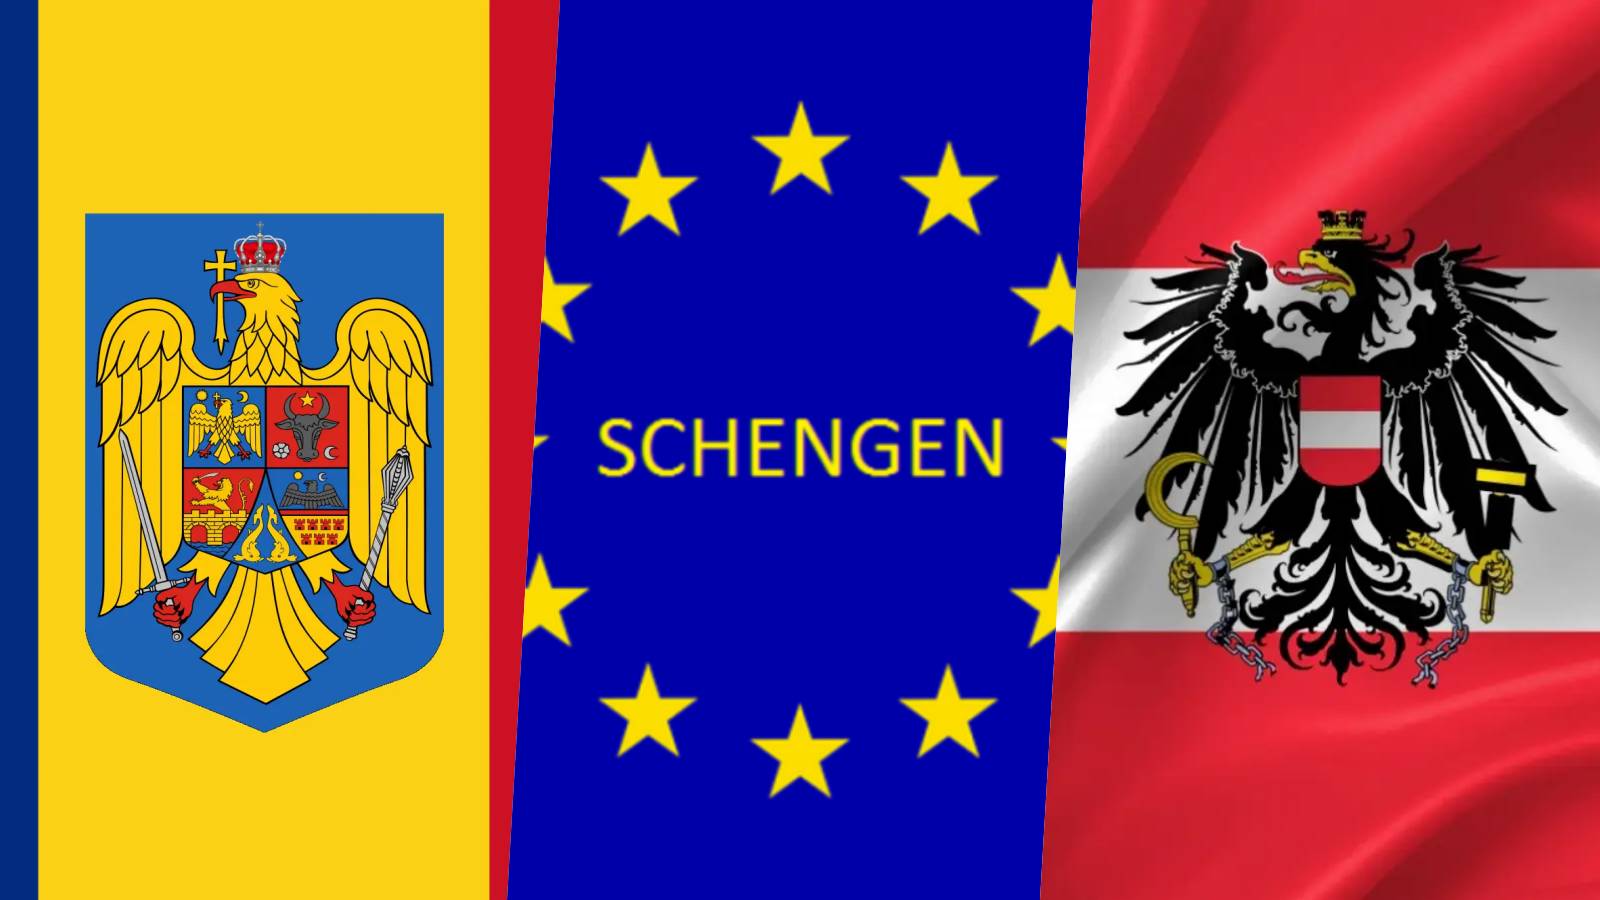 Austria Masurile Oficiale RADICALE Cerute Karl Nehammer Blocarea Aderarii Romaniei Schengen